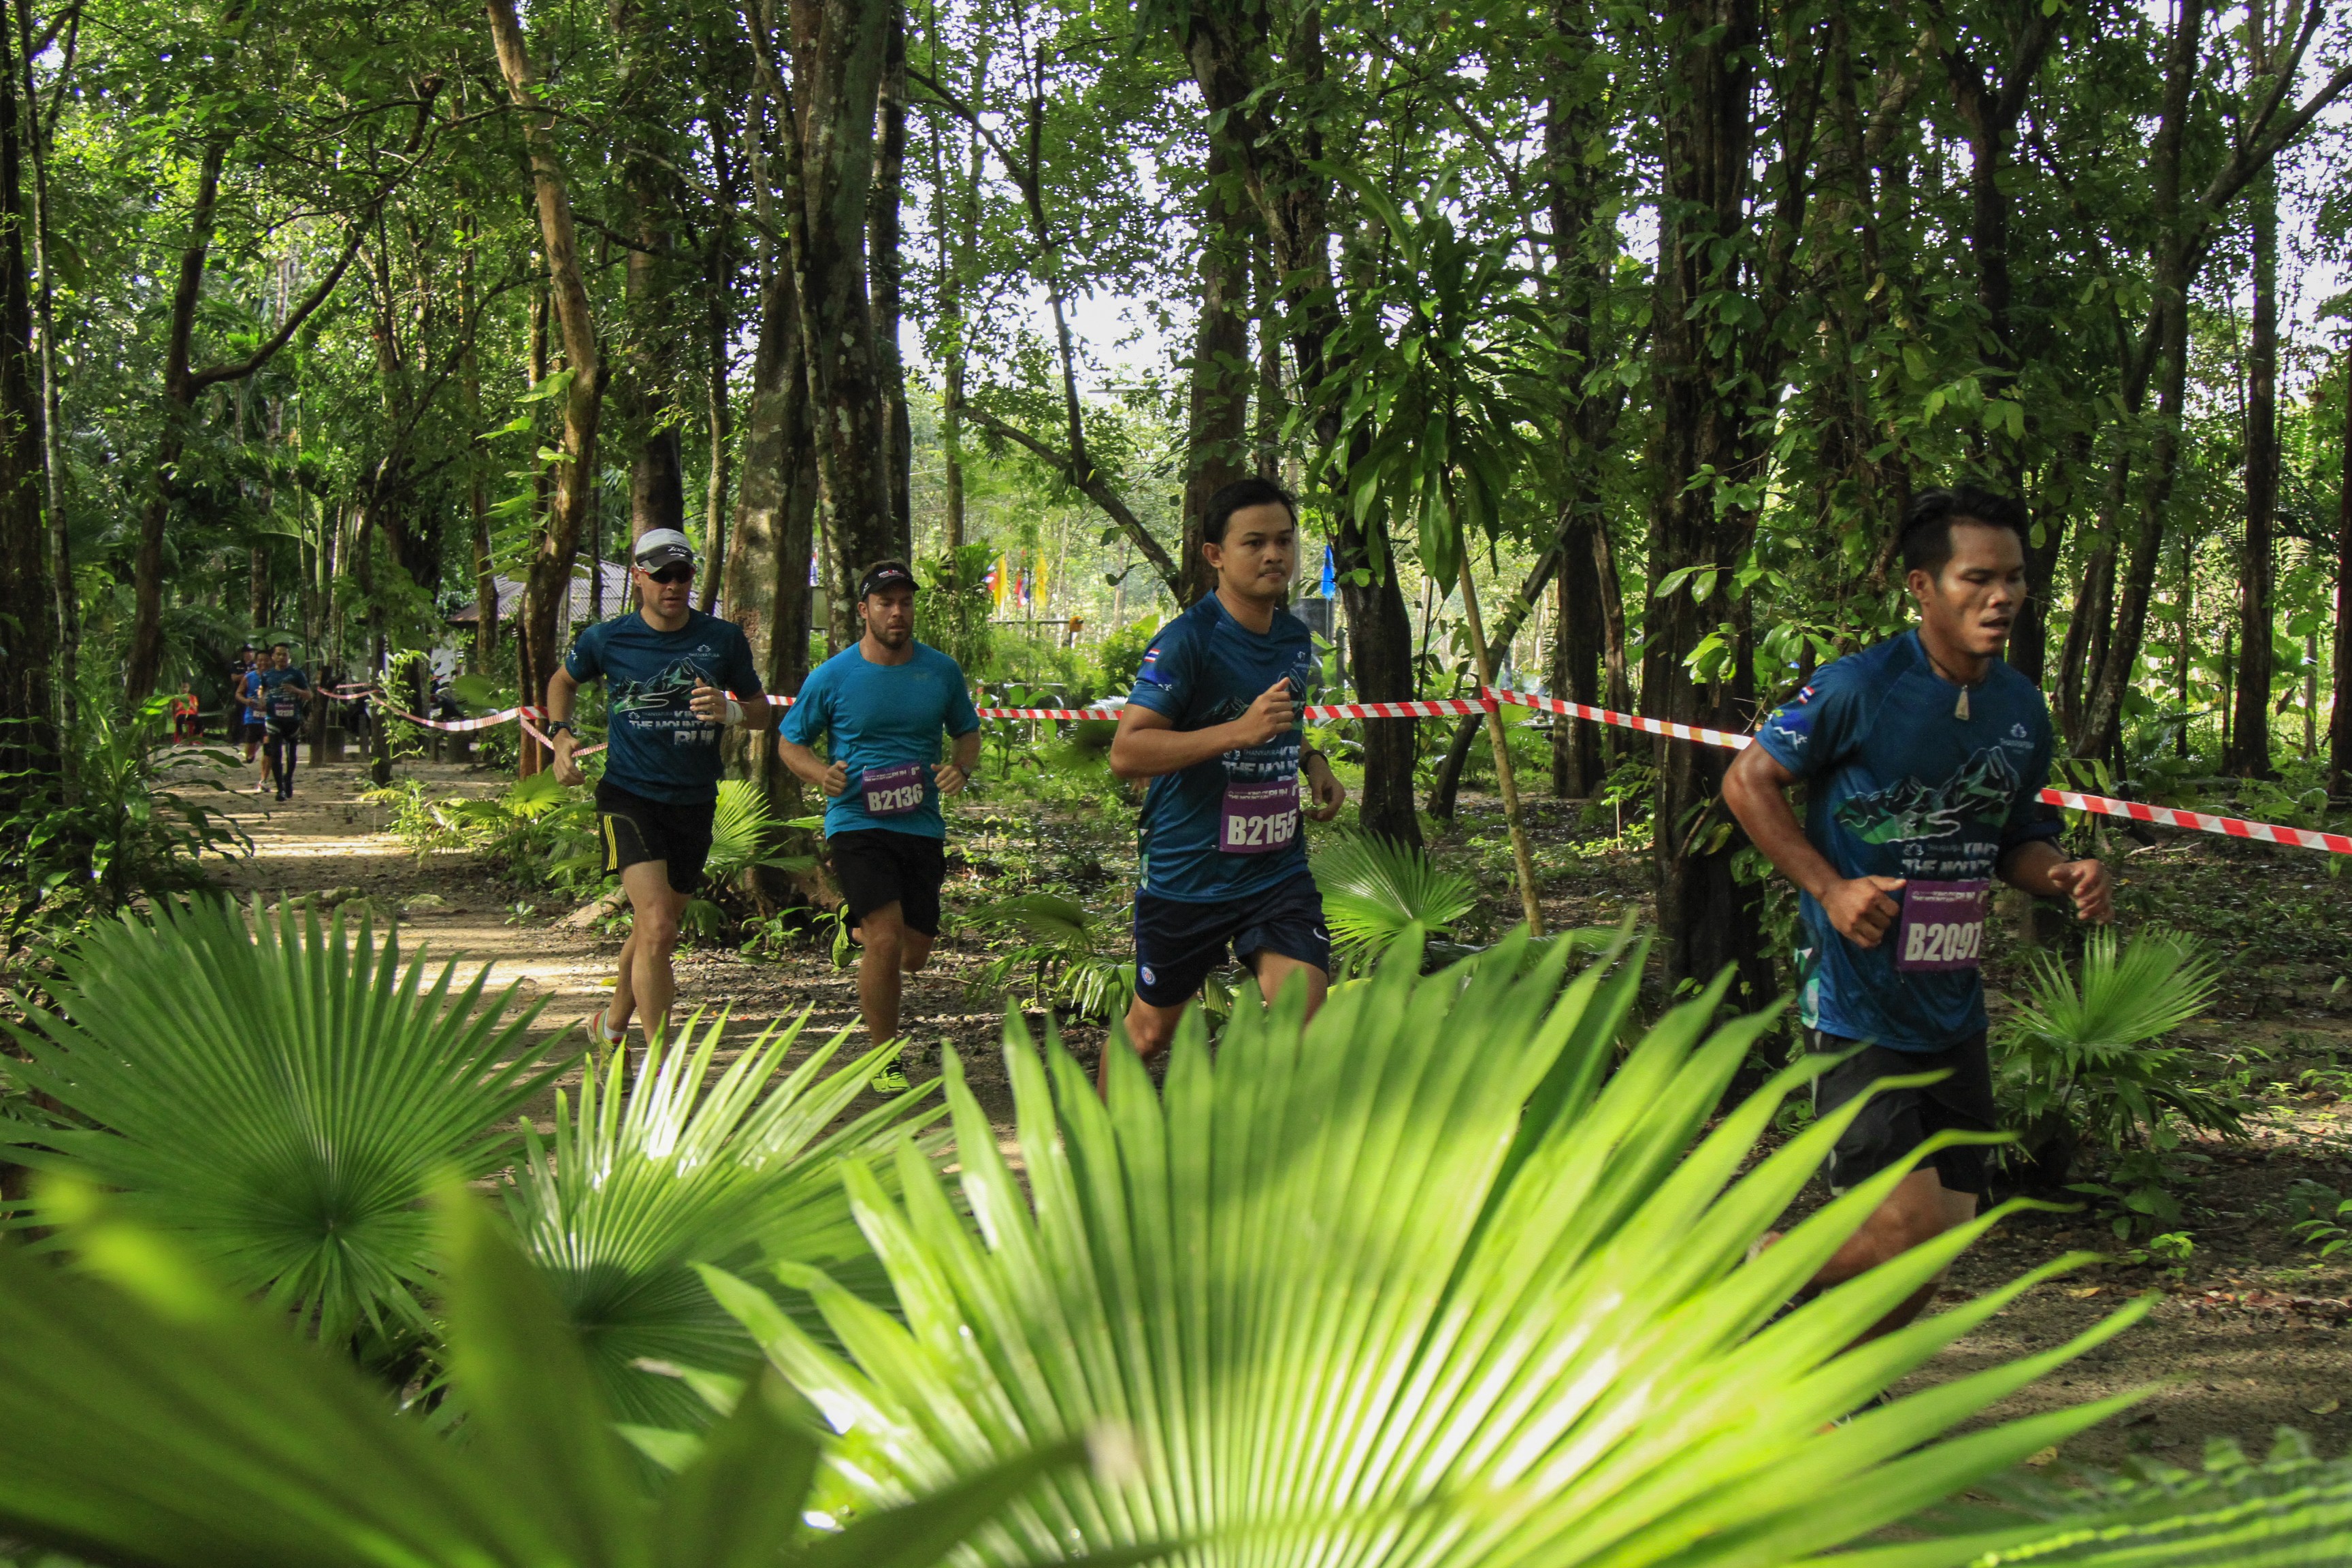 Athletes on a training run from the Thanyapura Olympic village in Phuket, Thailand.